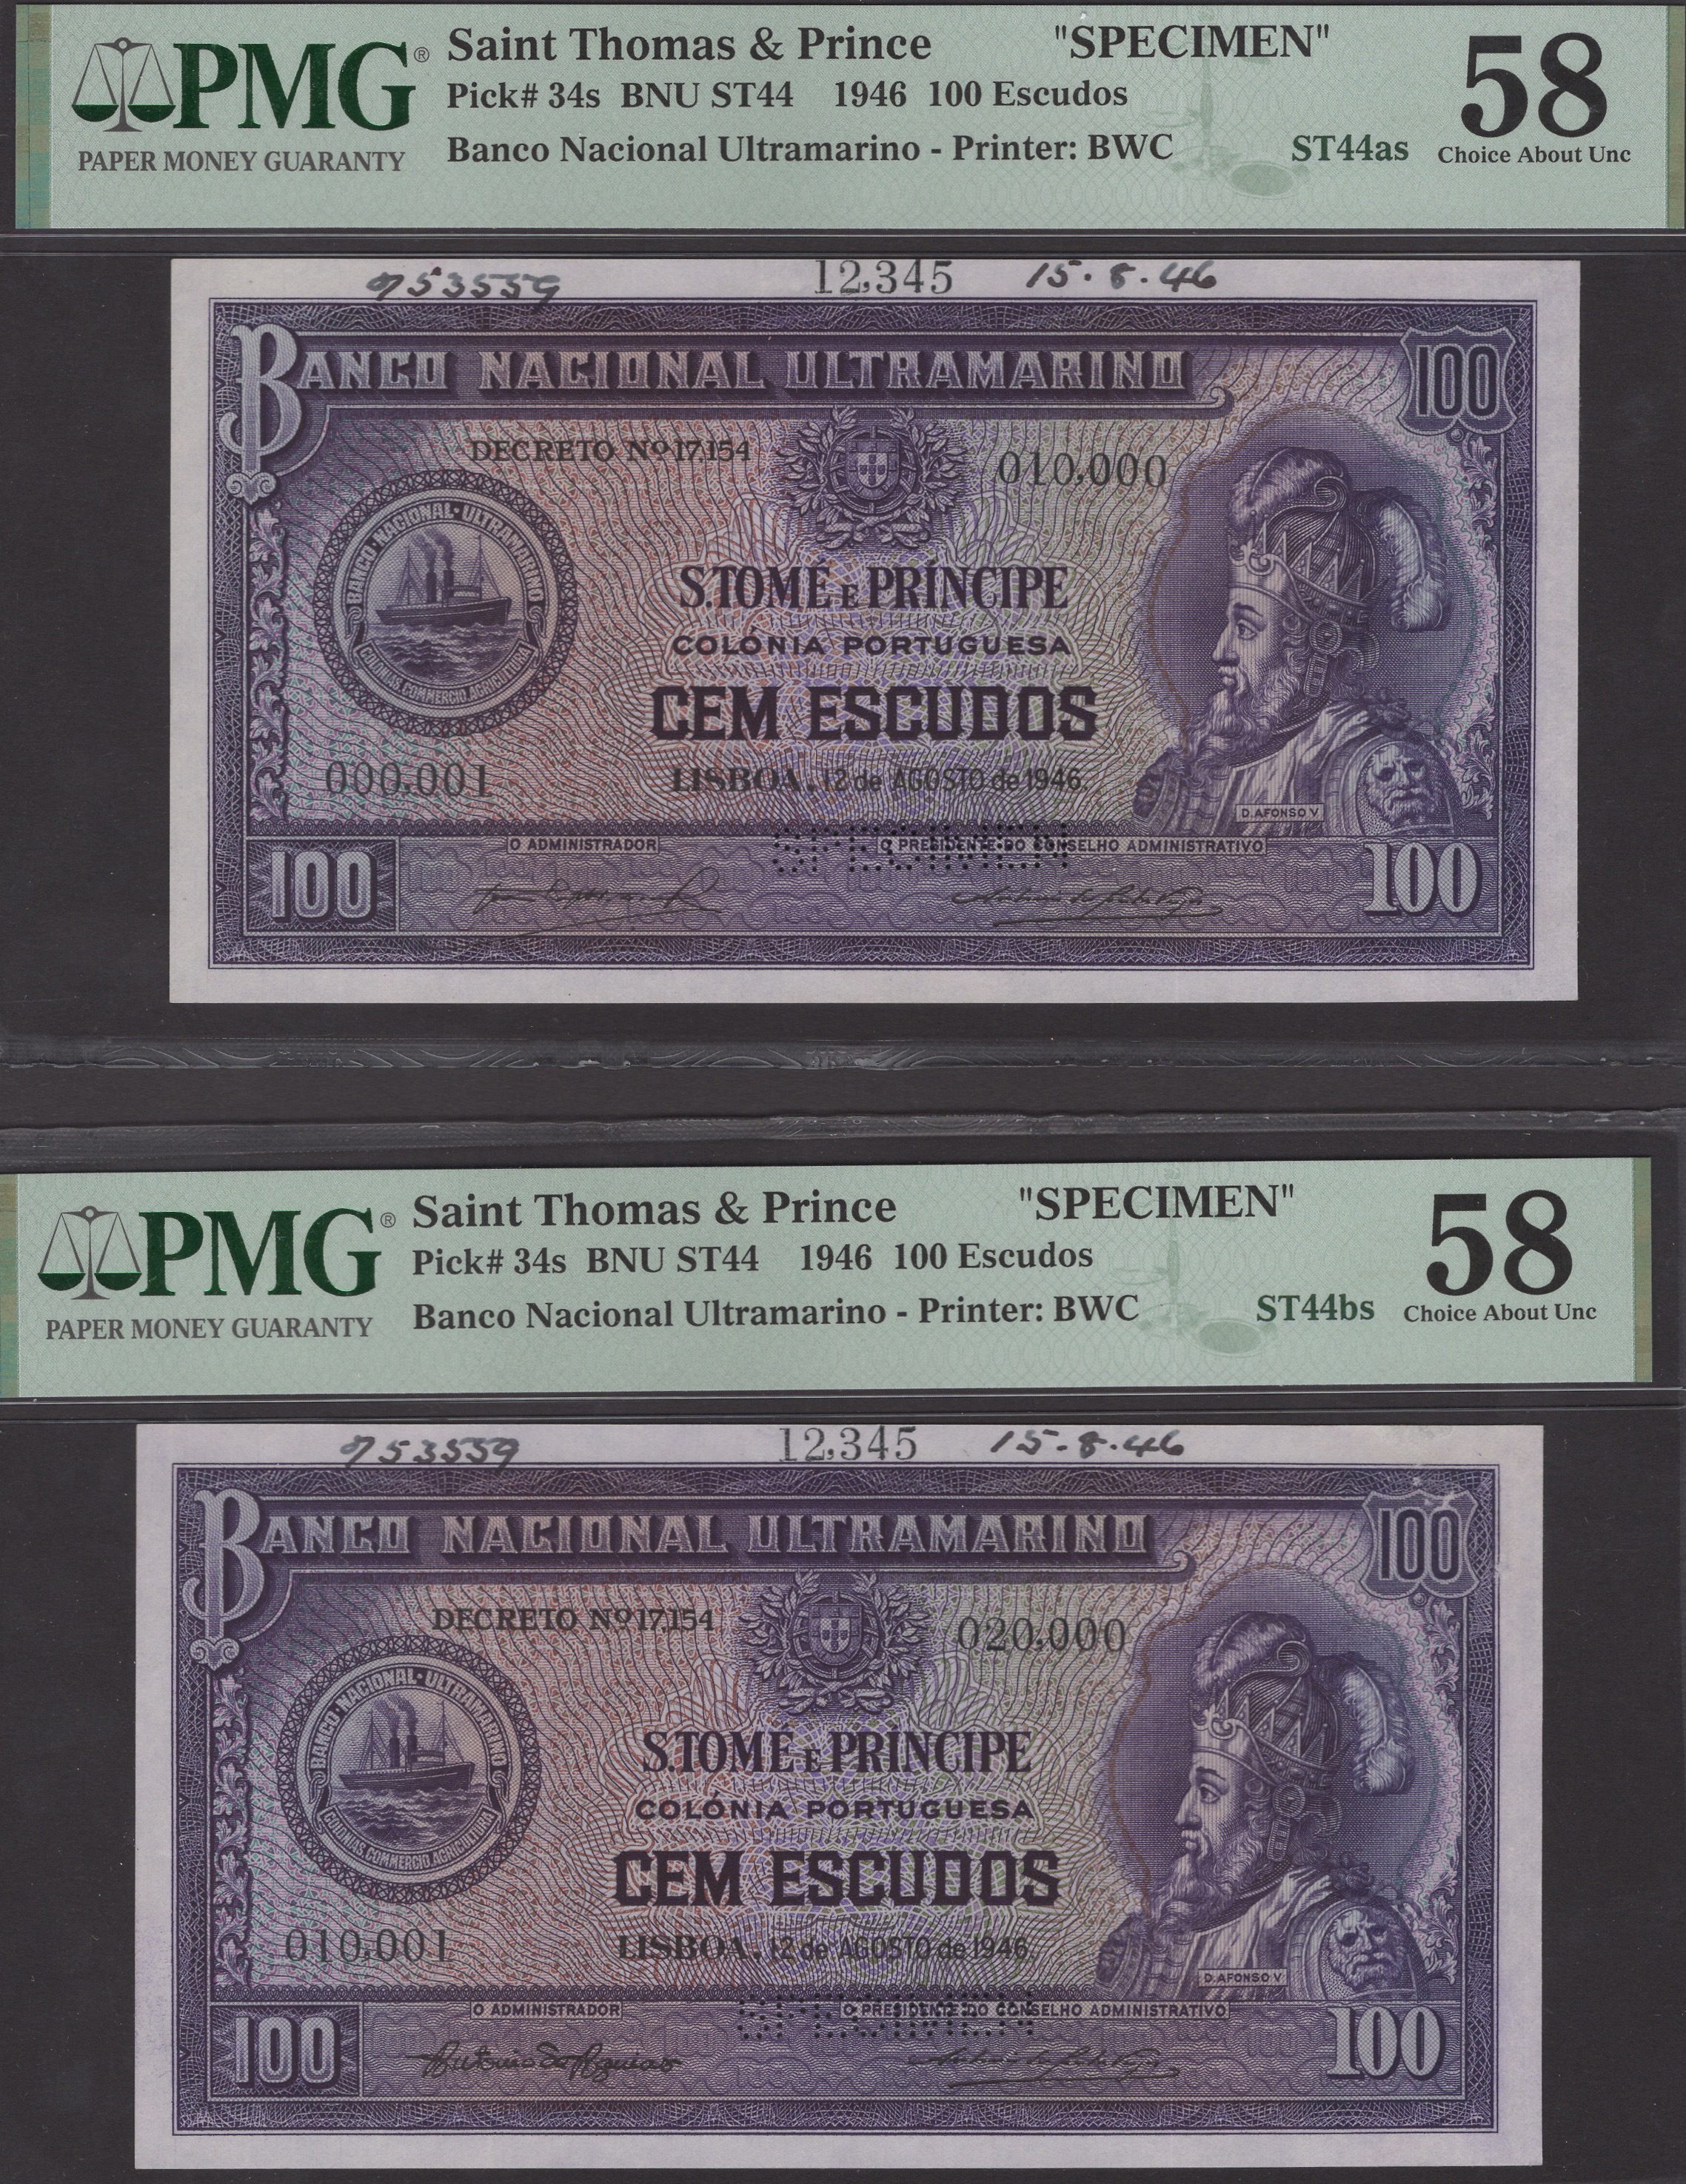 Banco Nacional Ultramarino, St Thomas & Prince, printers archival specimens for 100 Escudos...